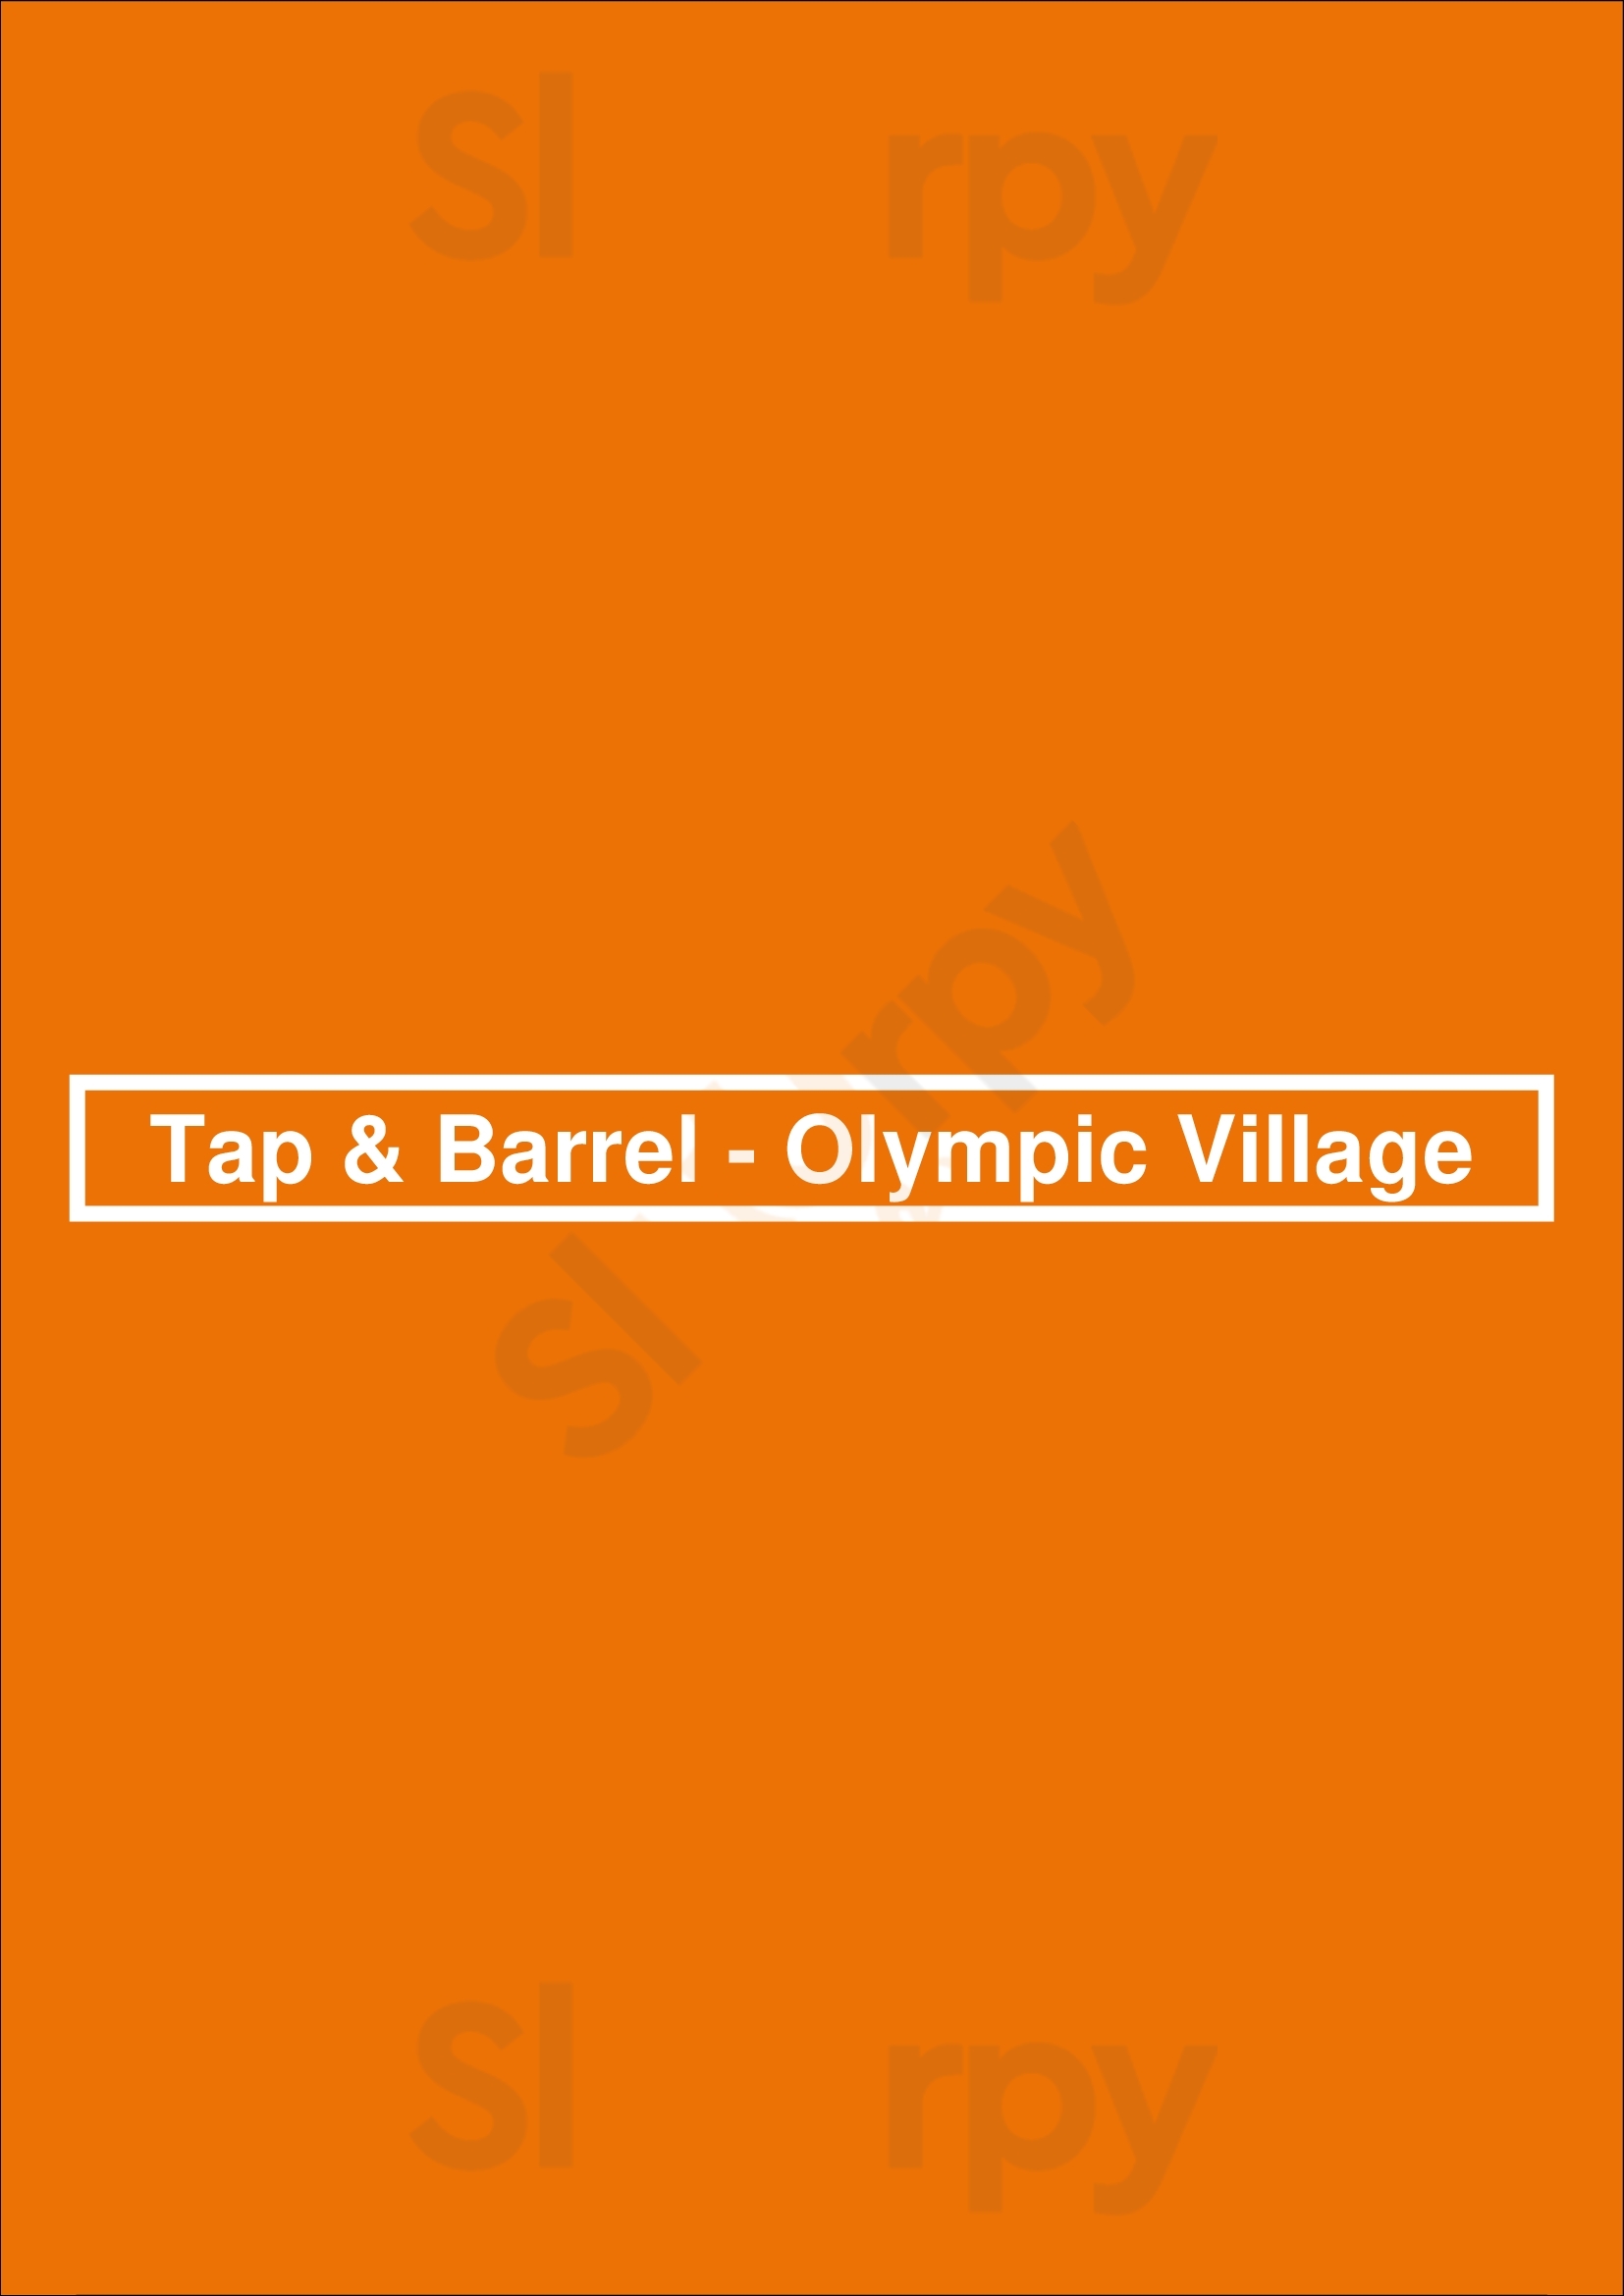 Tap & Barrel - Olympic Village Vancouver Menu - 1